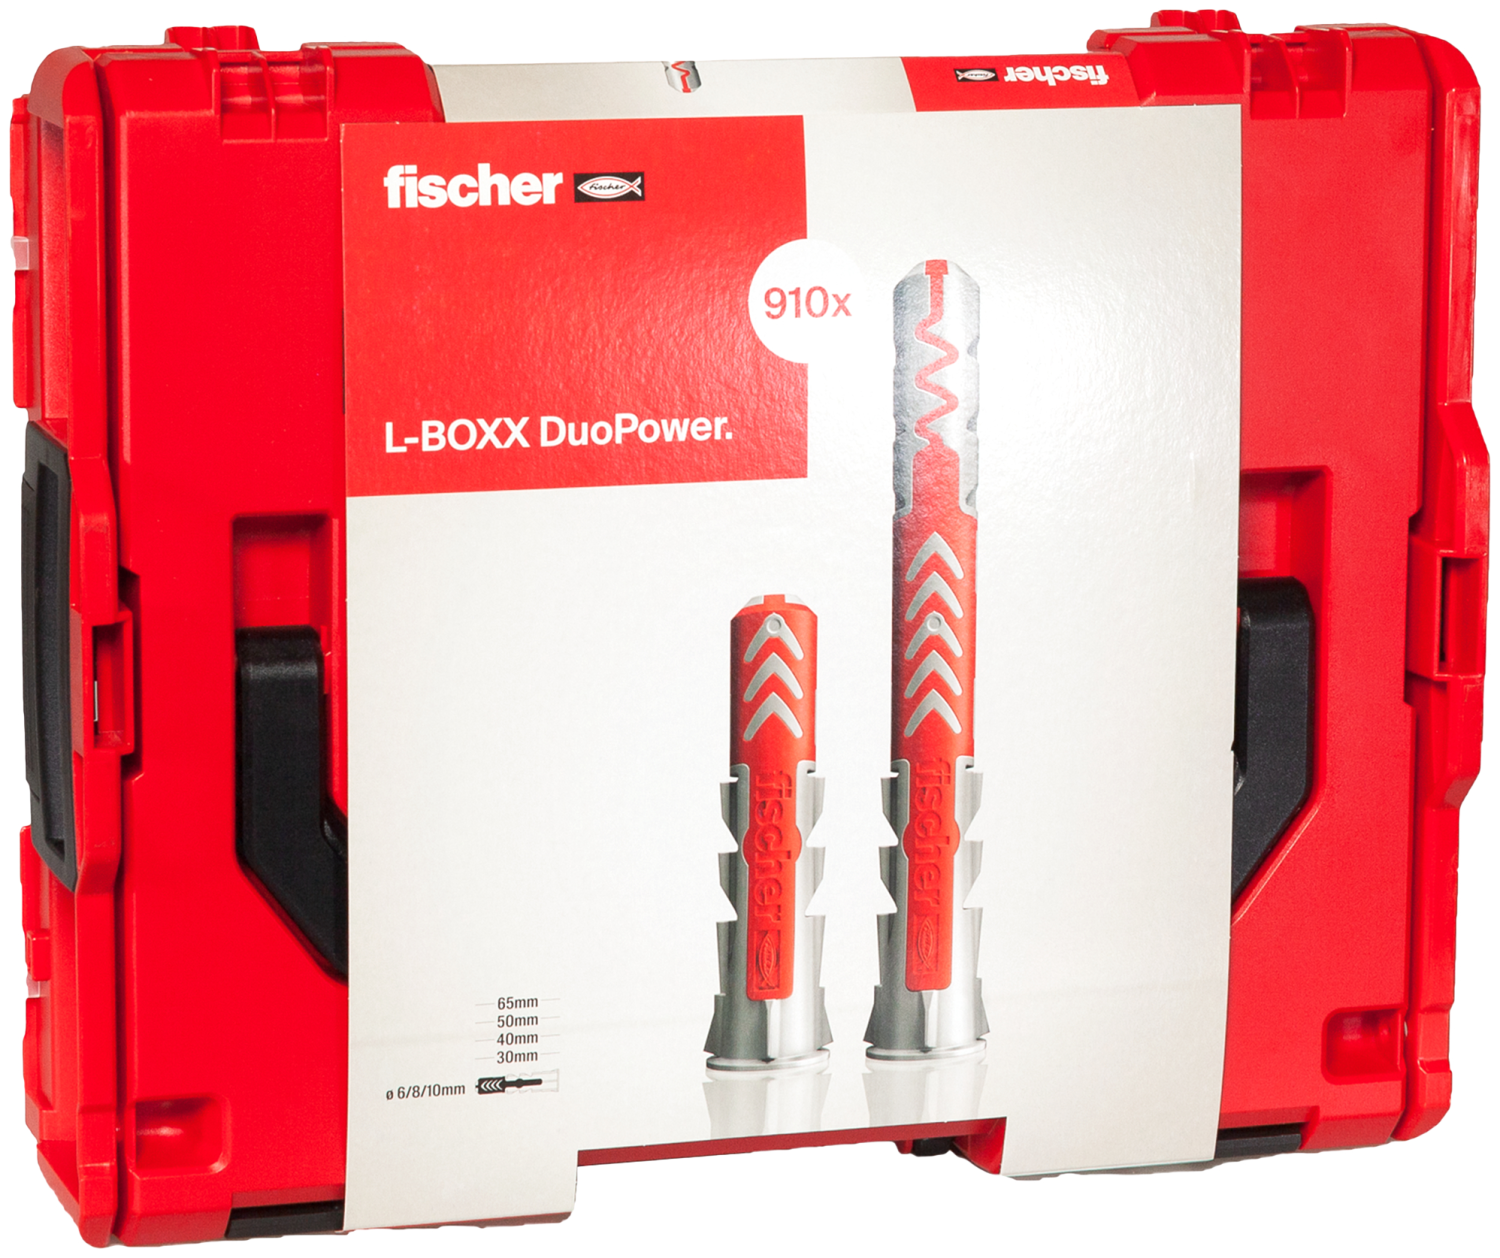 fischer DuoPower L-BOXX 102 910-delige pluggenset in L-Boxx-image